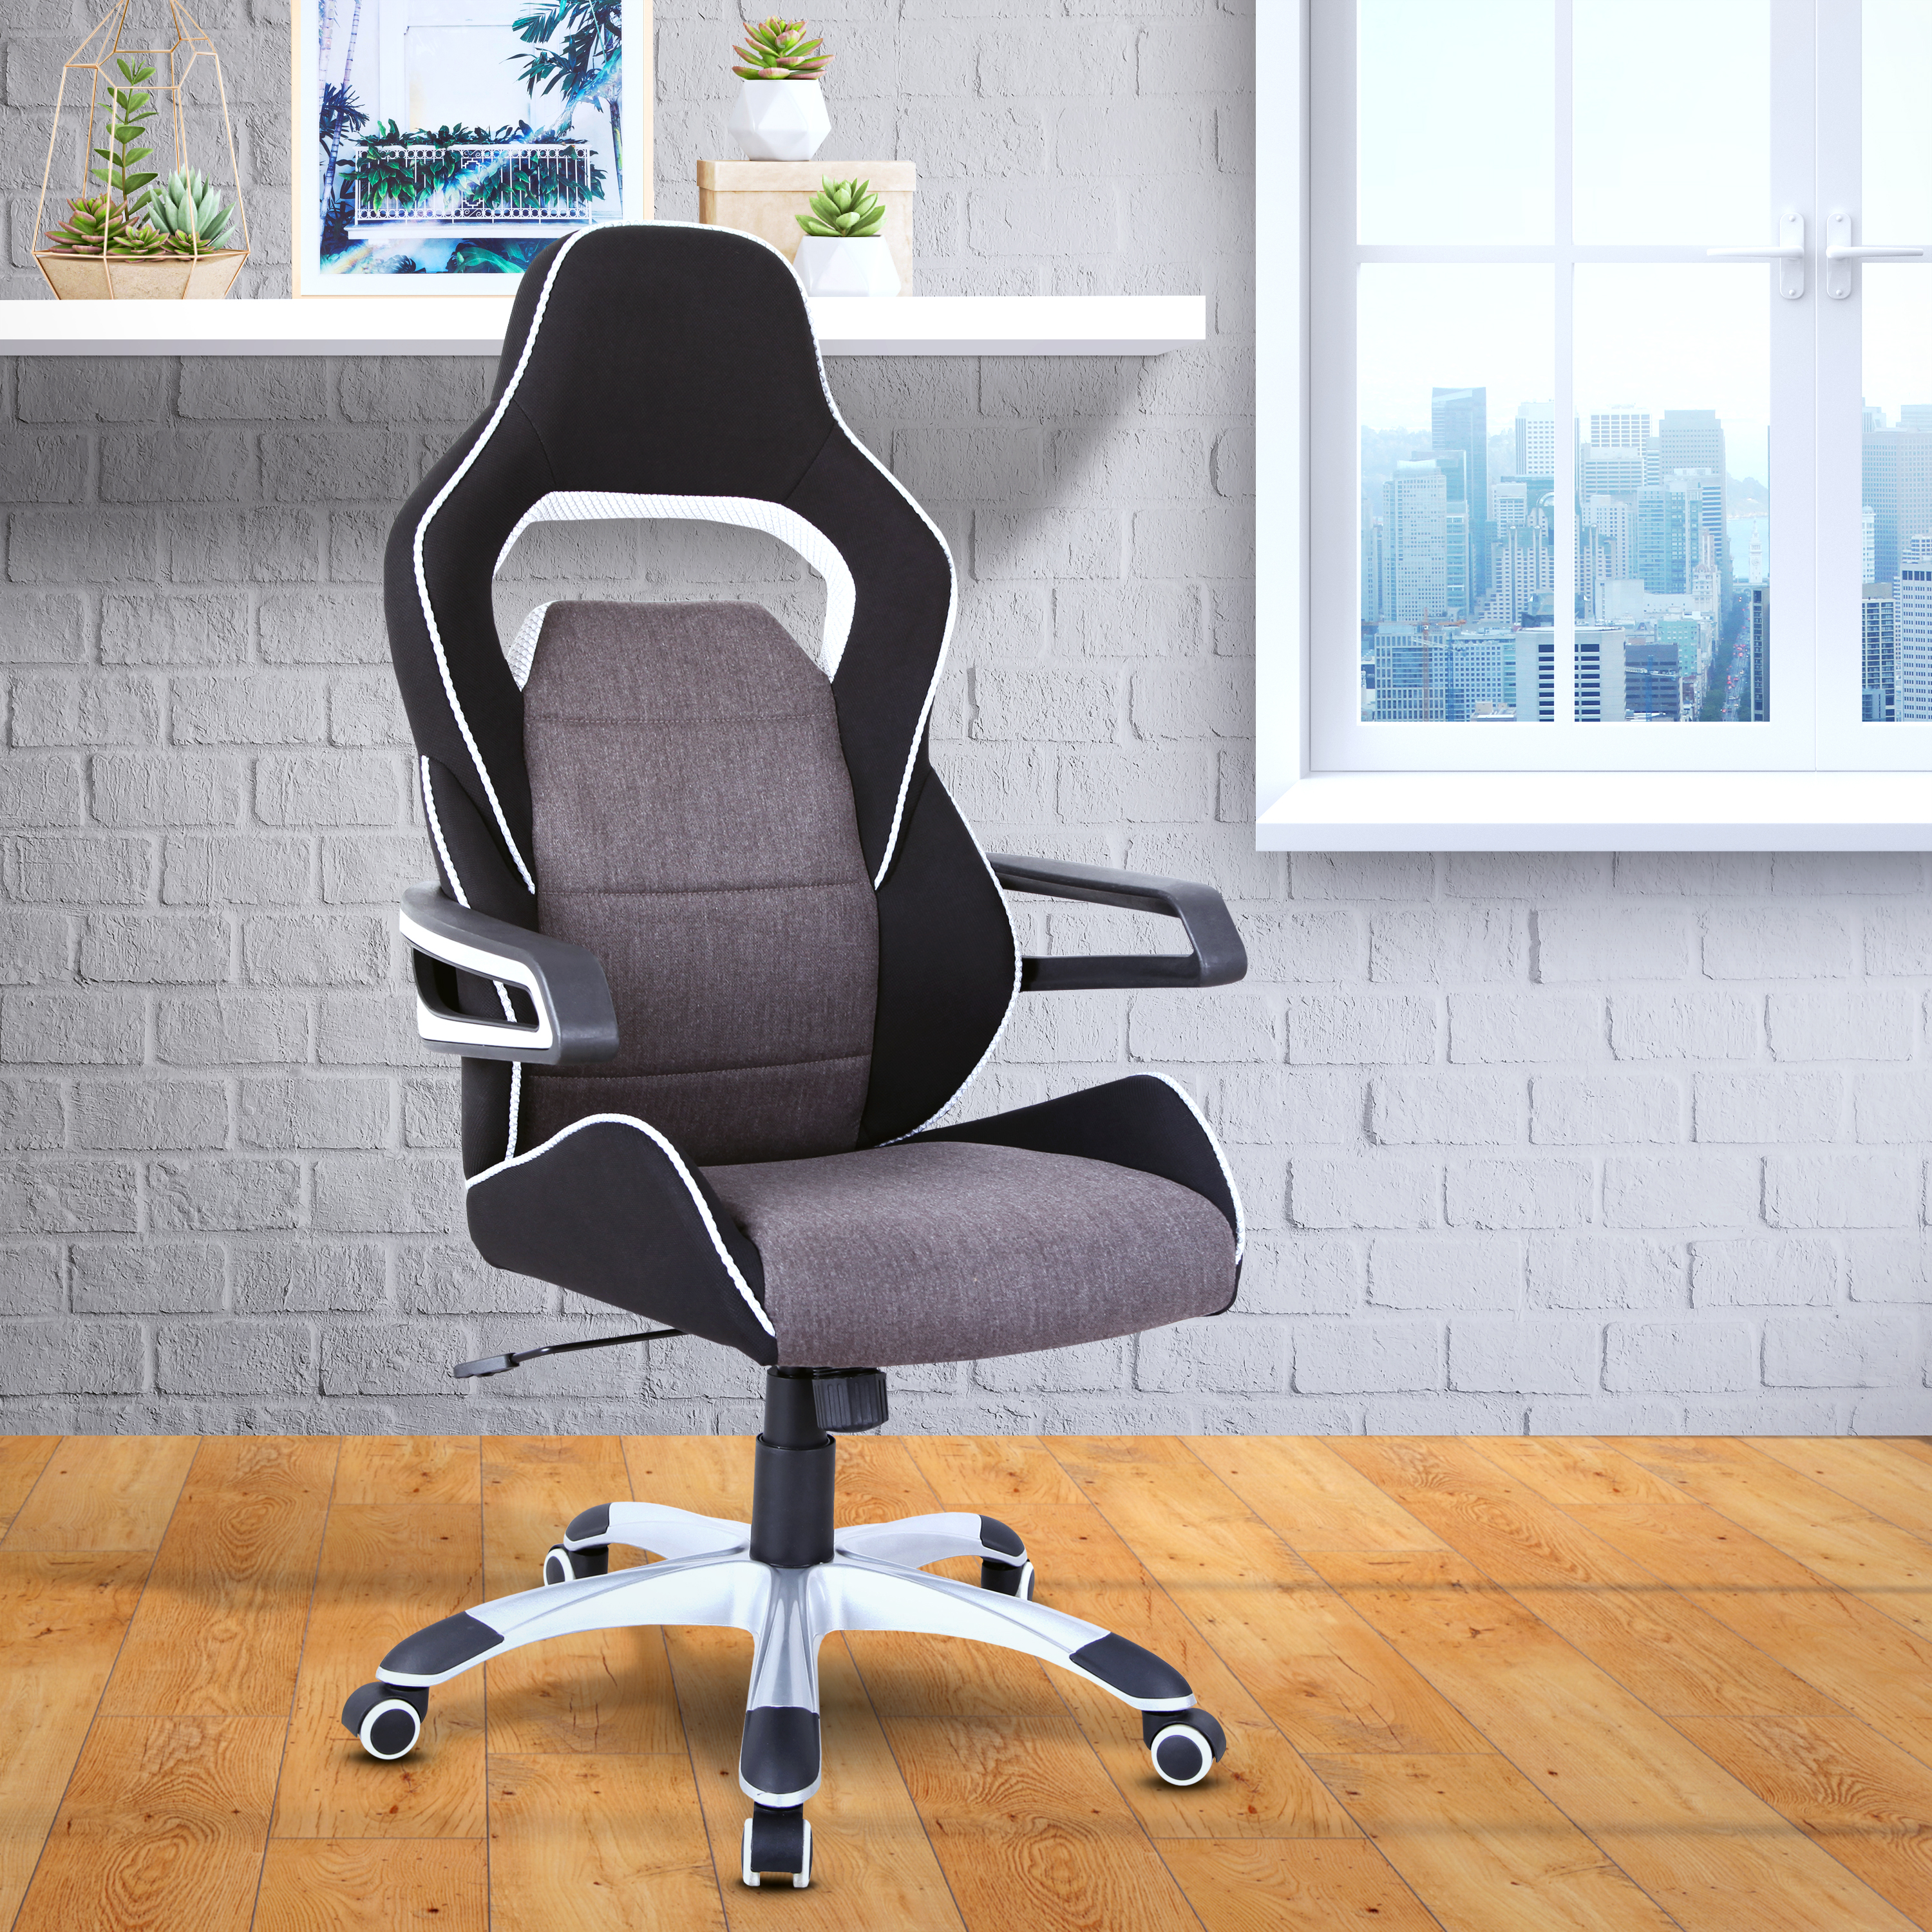 Techni Mobili Ergonomic Upholstered Racing Style Home  Office Chair, Grey/Black-CASAINC